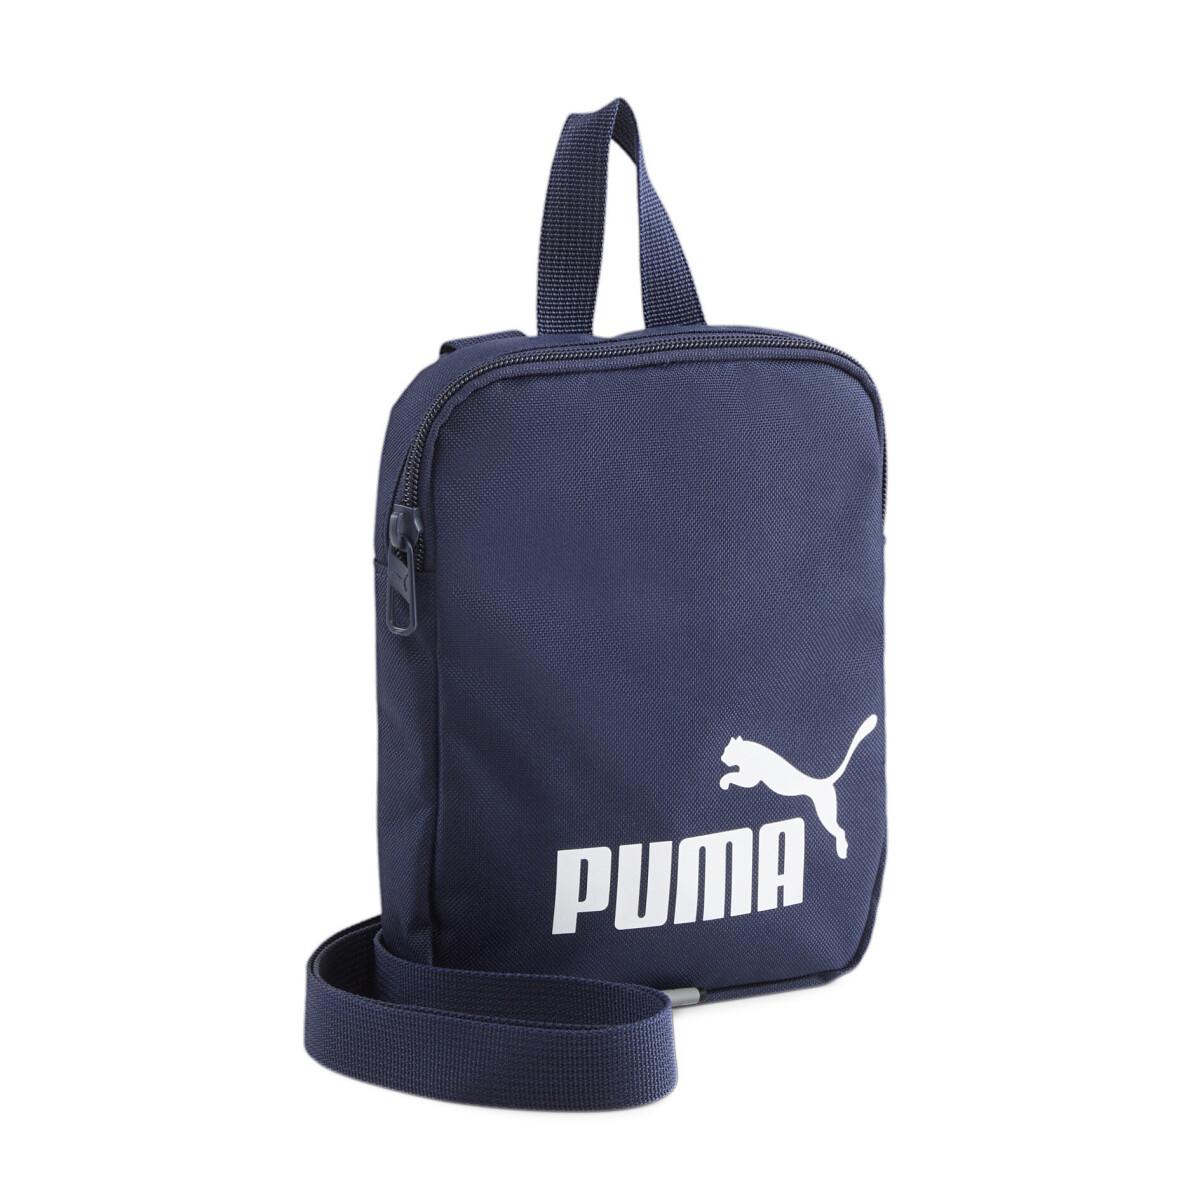 Bandolera Portable Puma - Marino/Blanco 